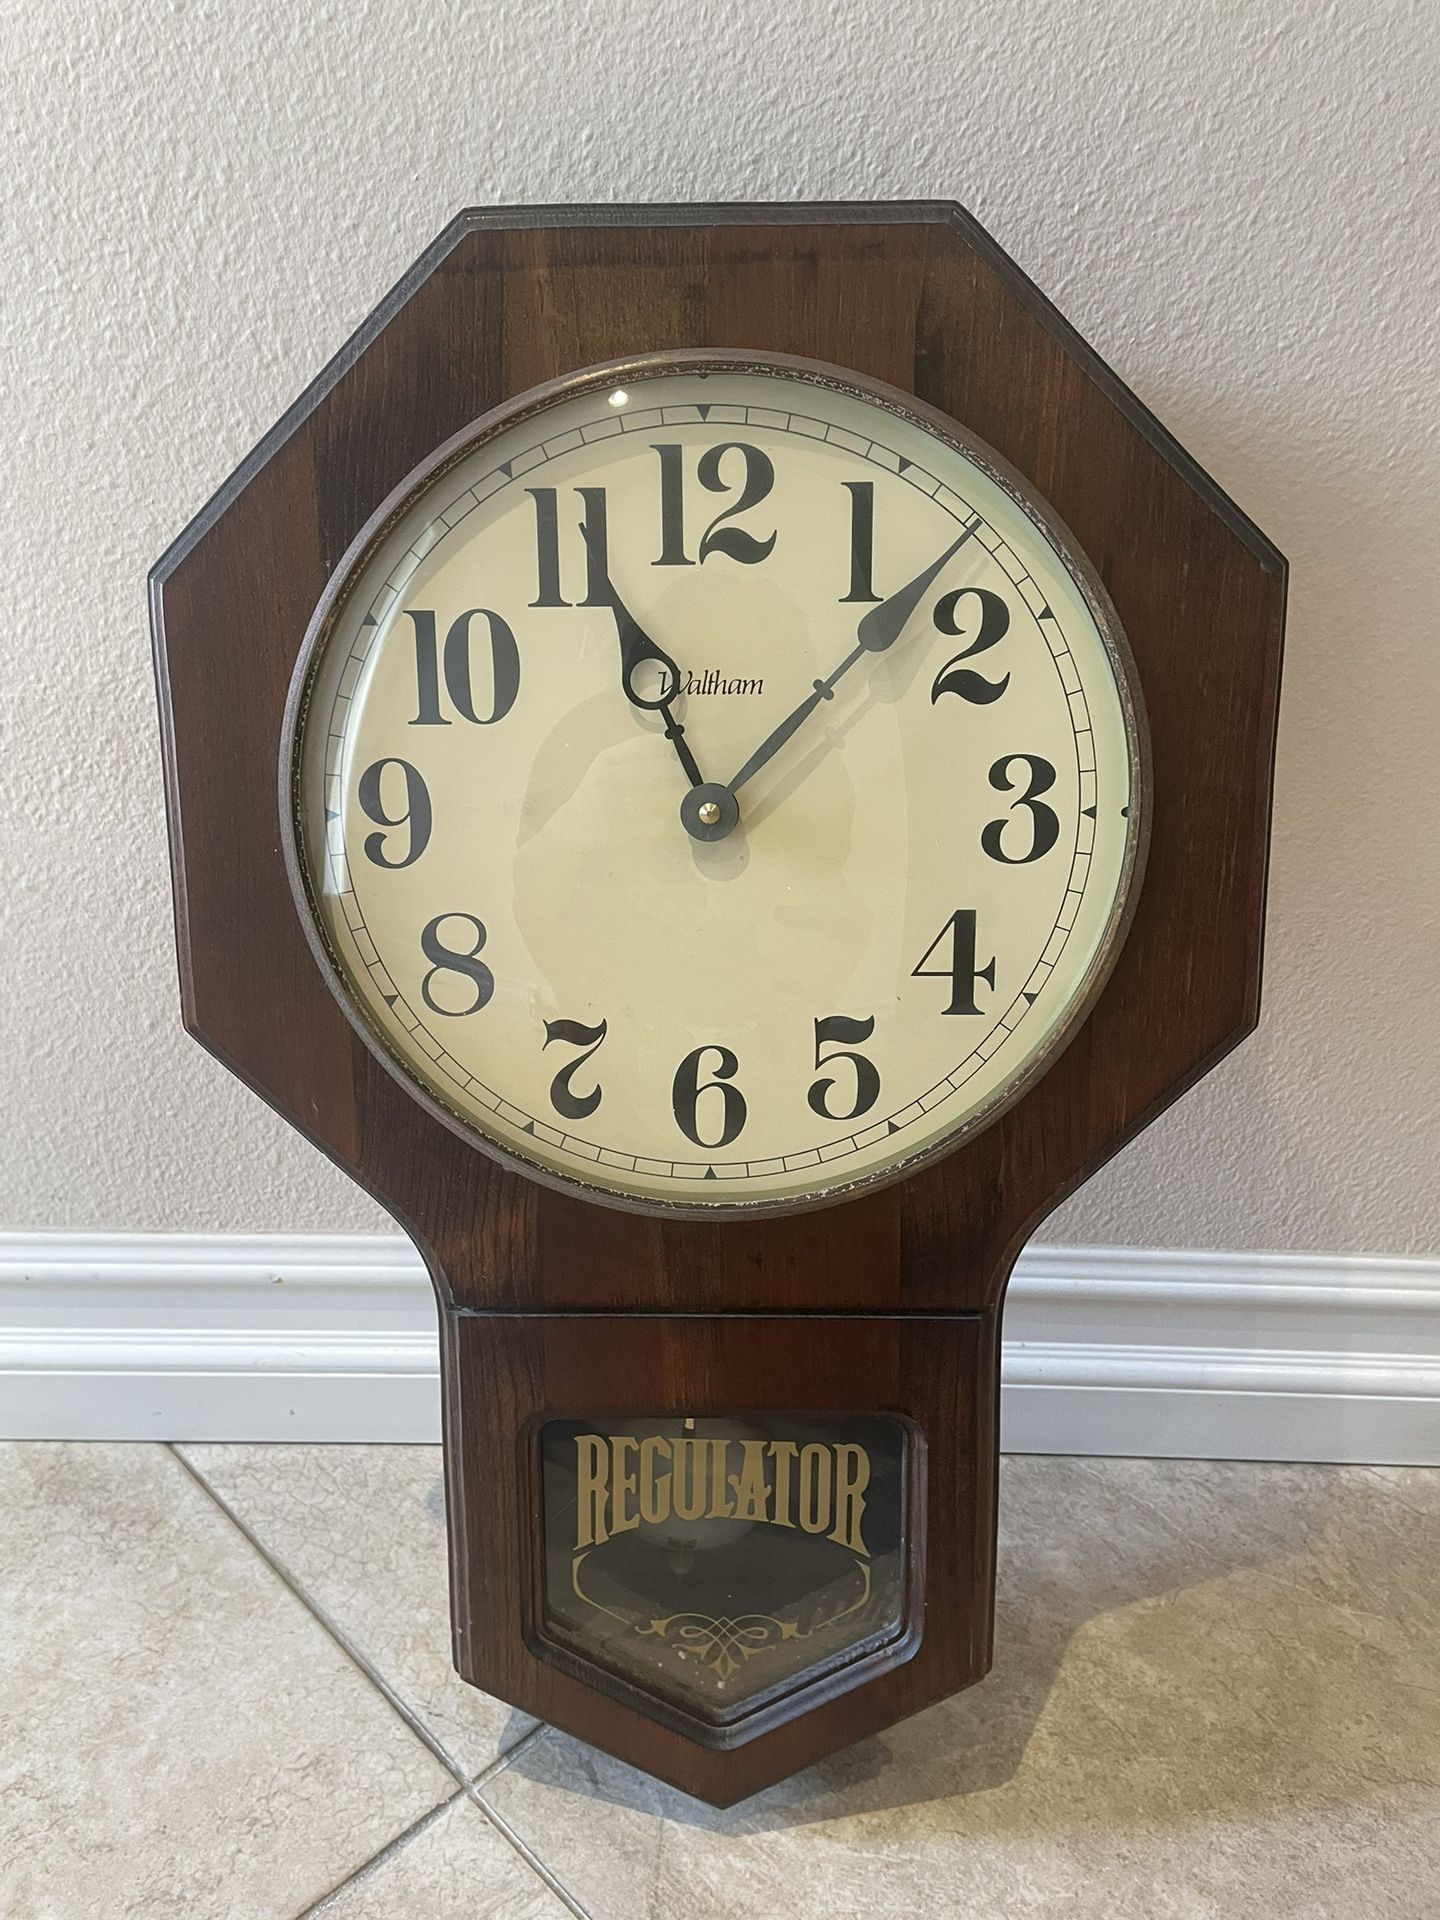 Antique Waltham Regulator Wall Clock.